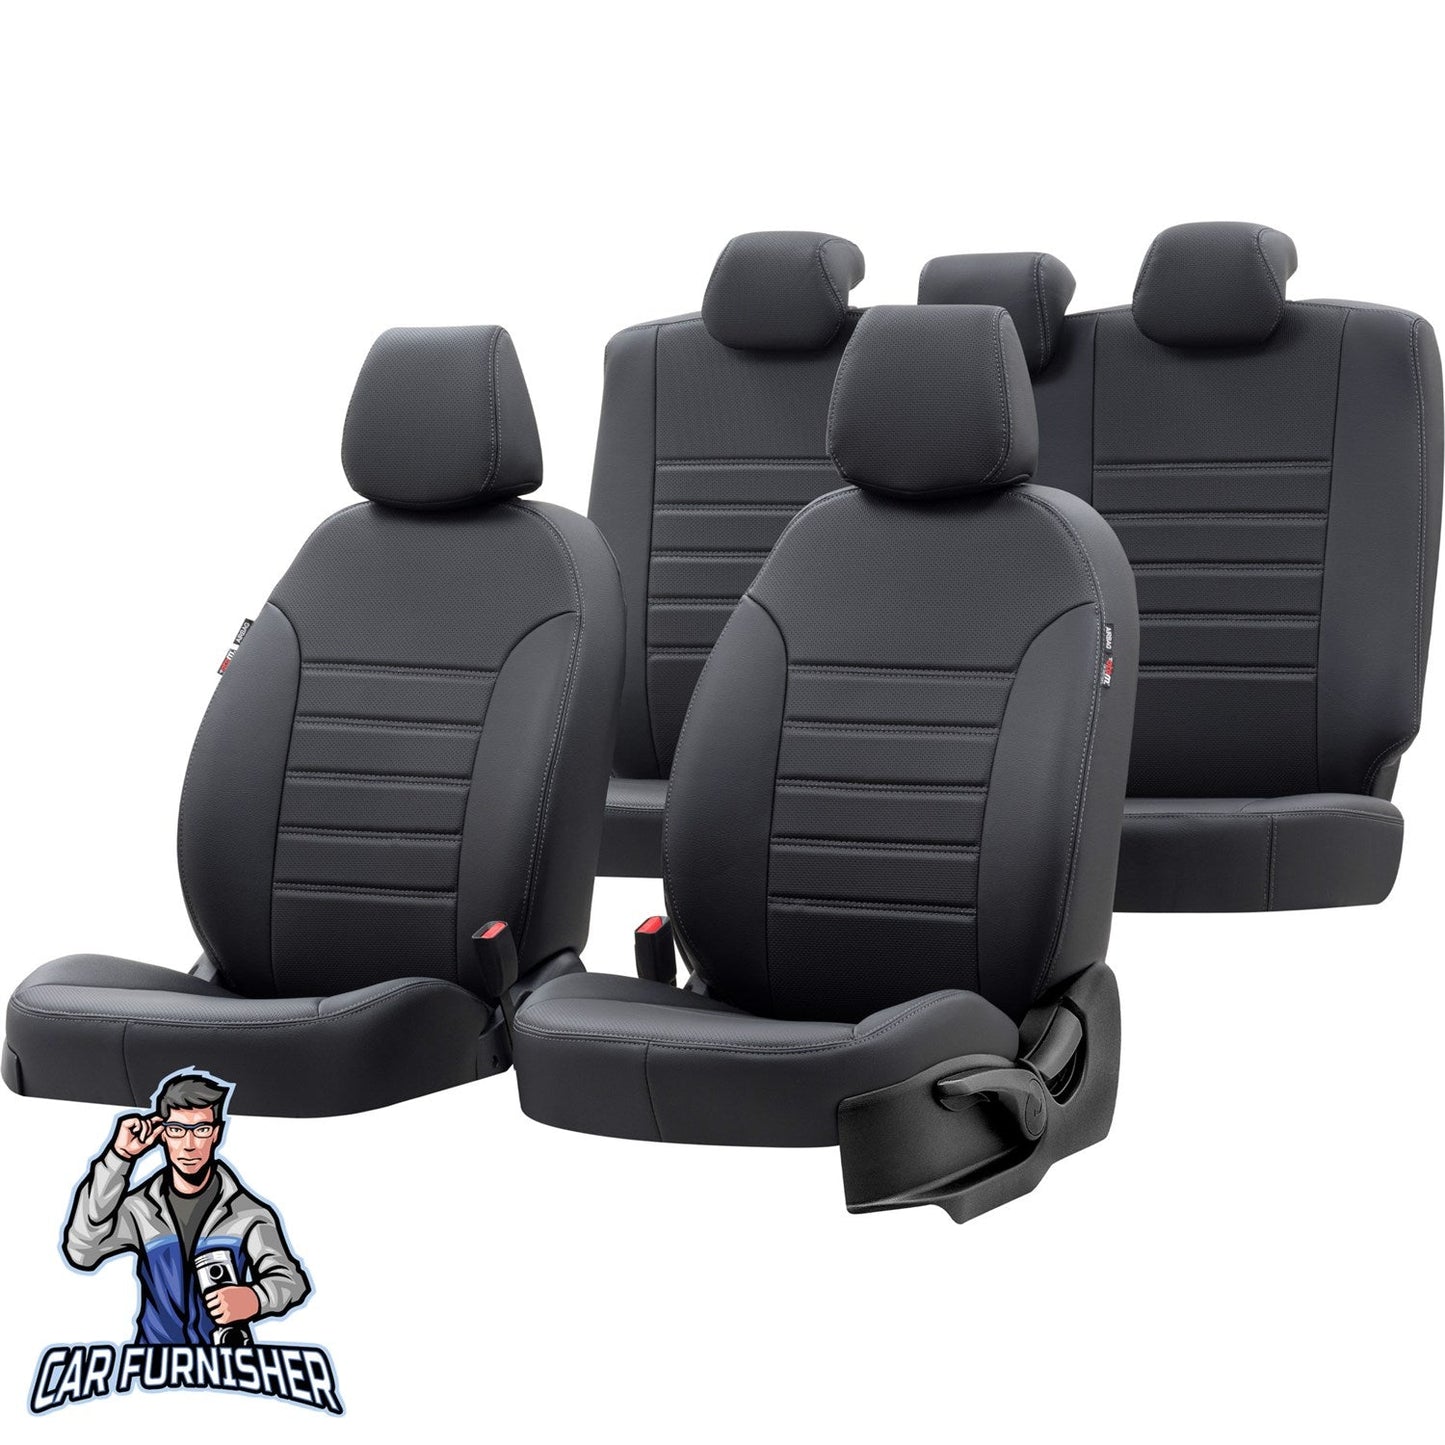 Kia Cerato Seat Covers New York Leather Design Black Leather